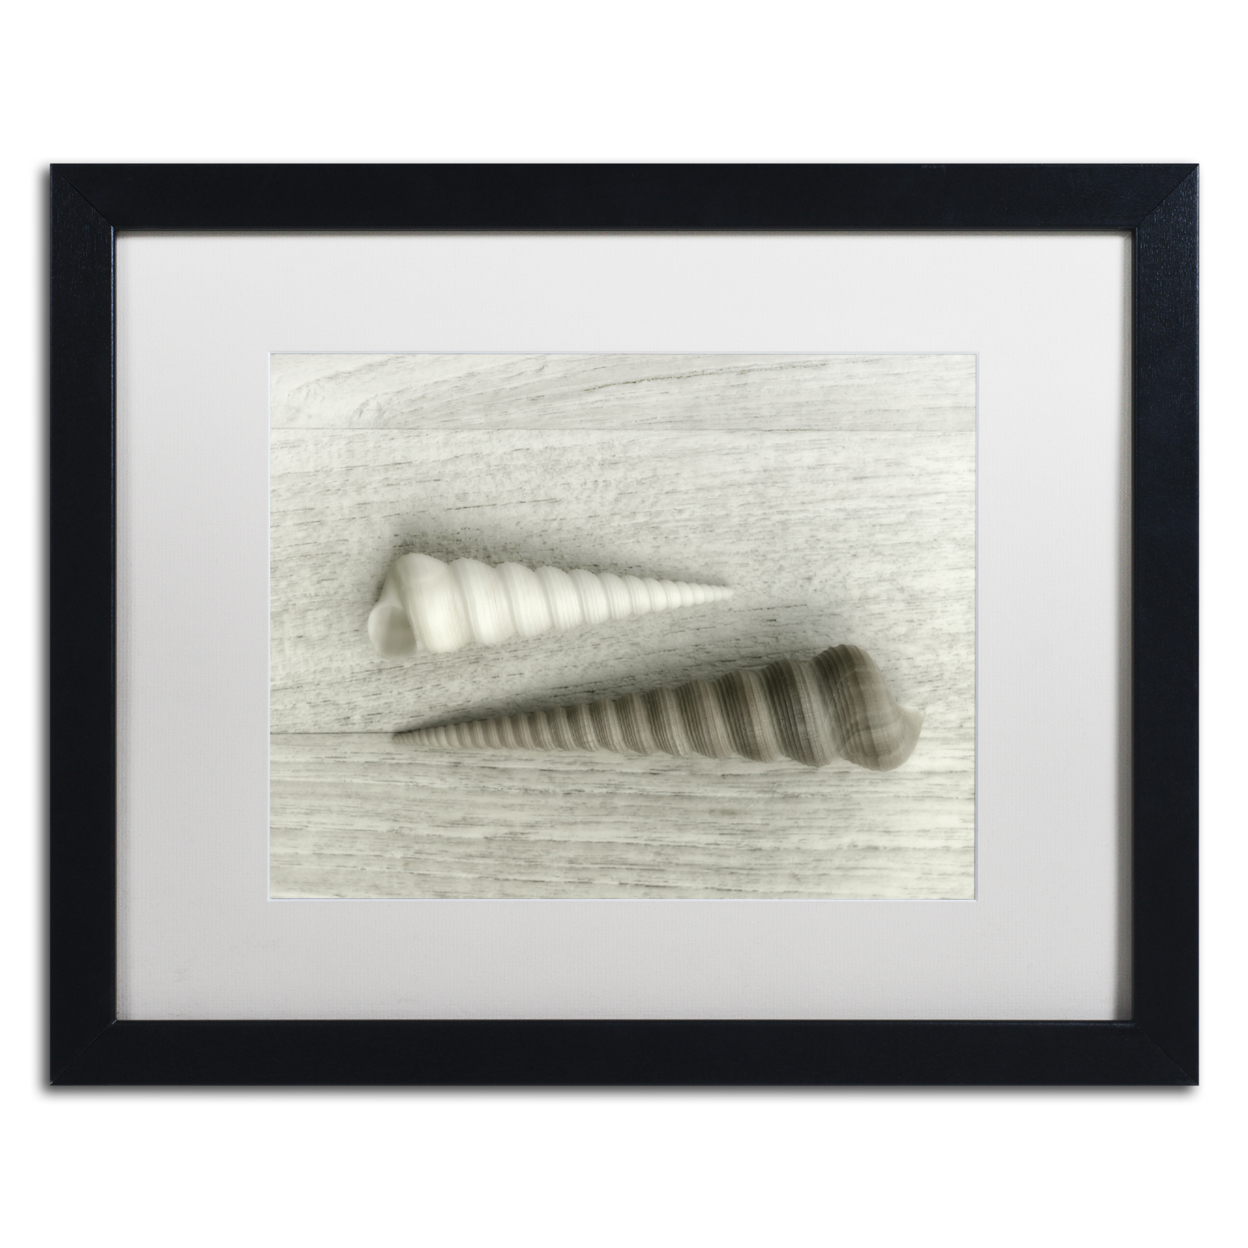 Cora Niele 'Sea Snail Shells' Black Wooden Framed Art 18 X 22 Inches